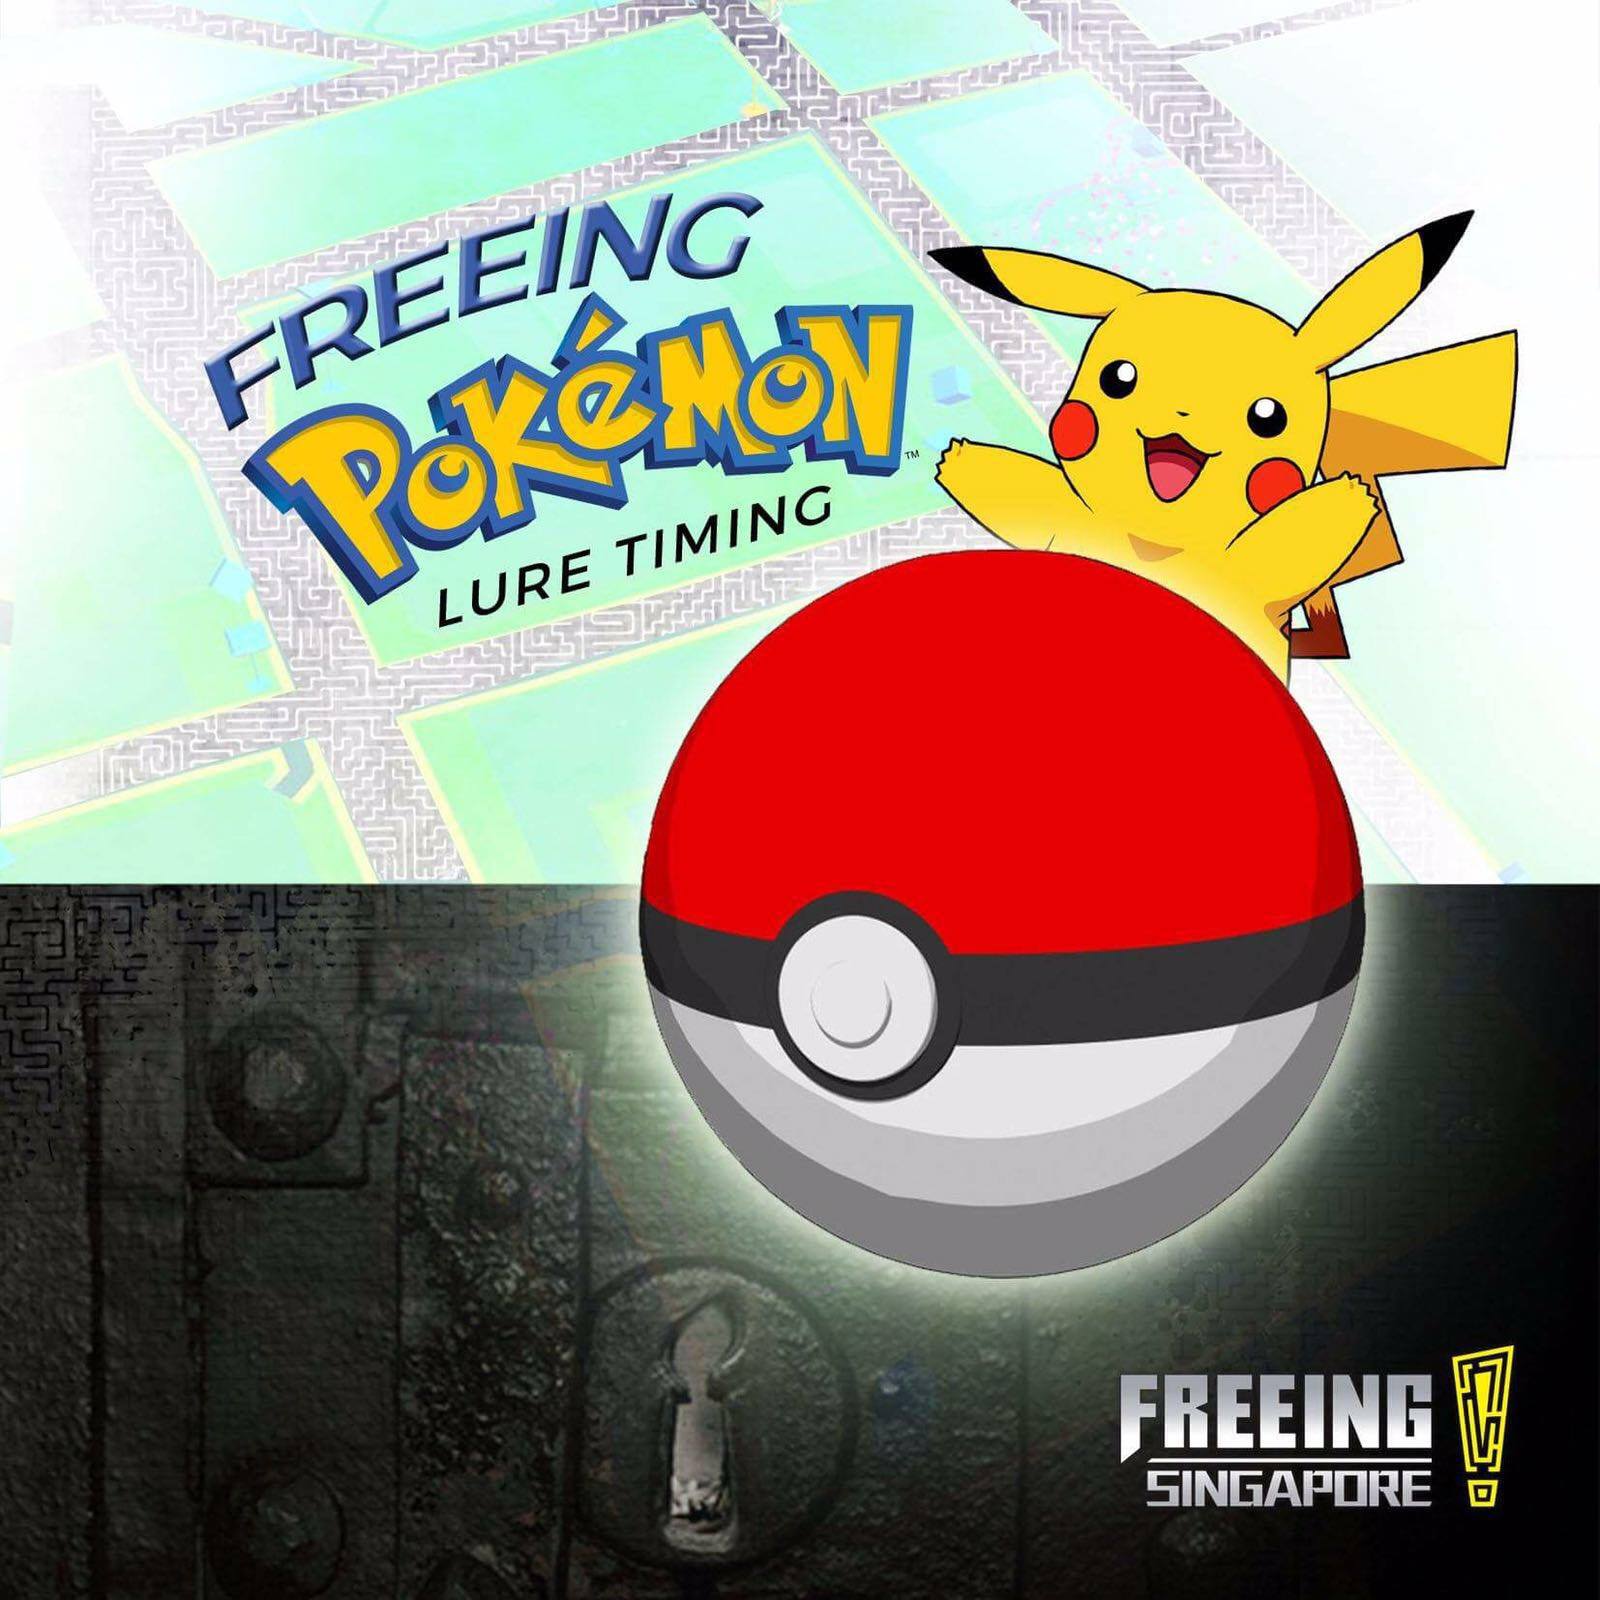 Freeing SG Activating Pokemon GO Lures Singapore Promotion 11 to 21 Aug 2016